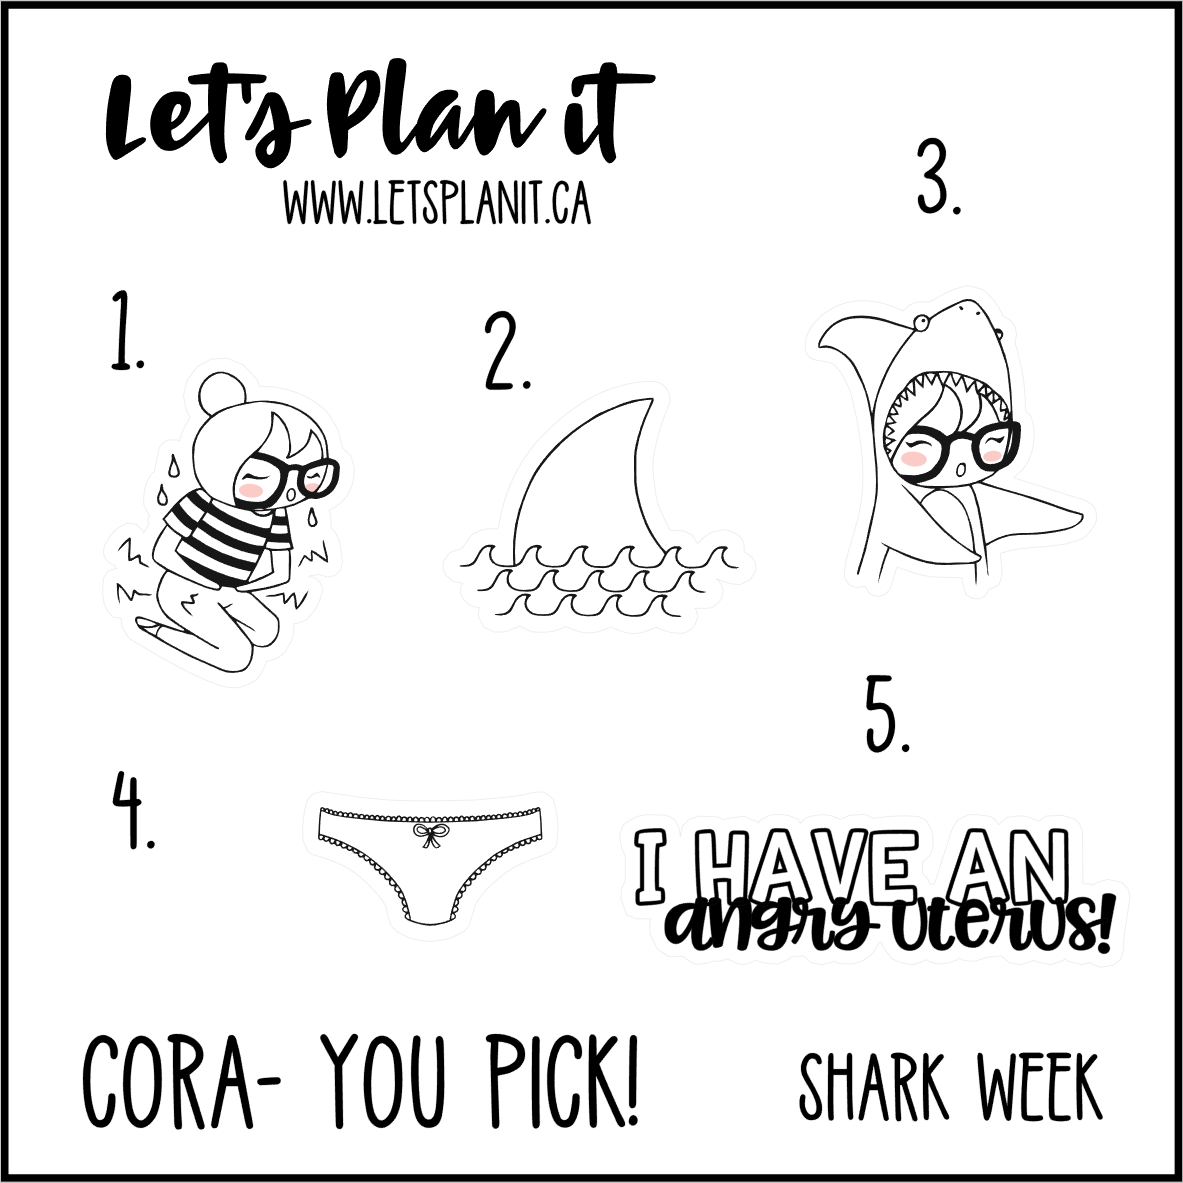 Cora-u-pick- Shark Week/ Period